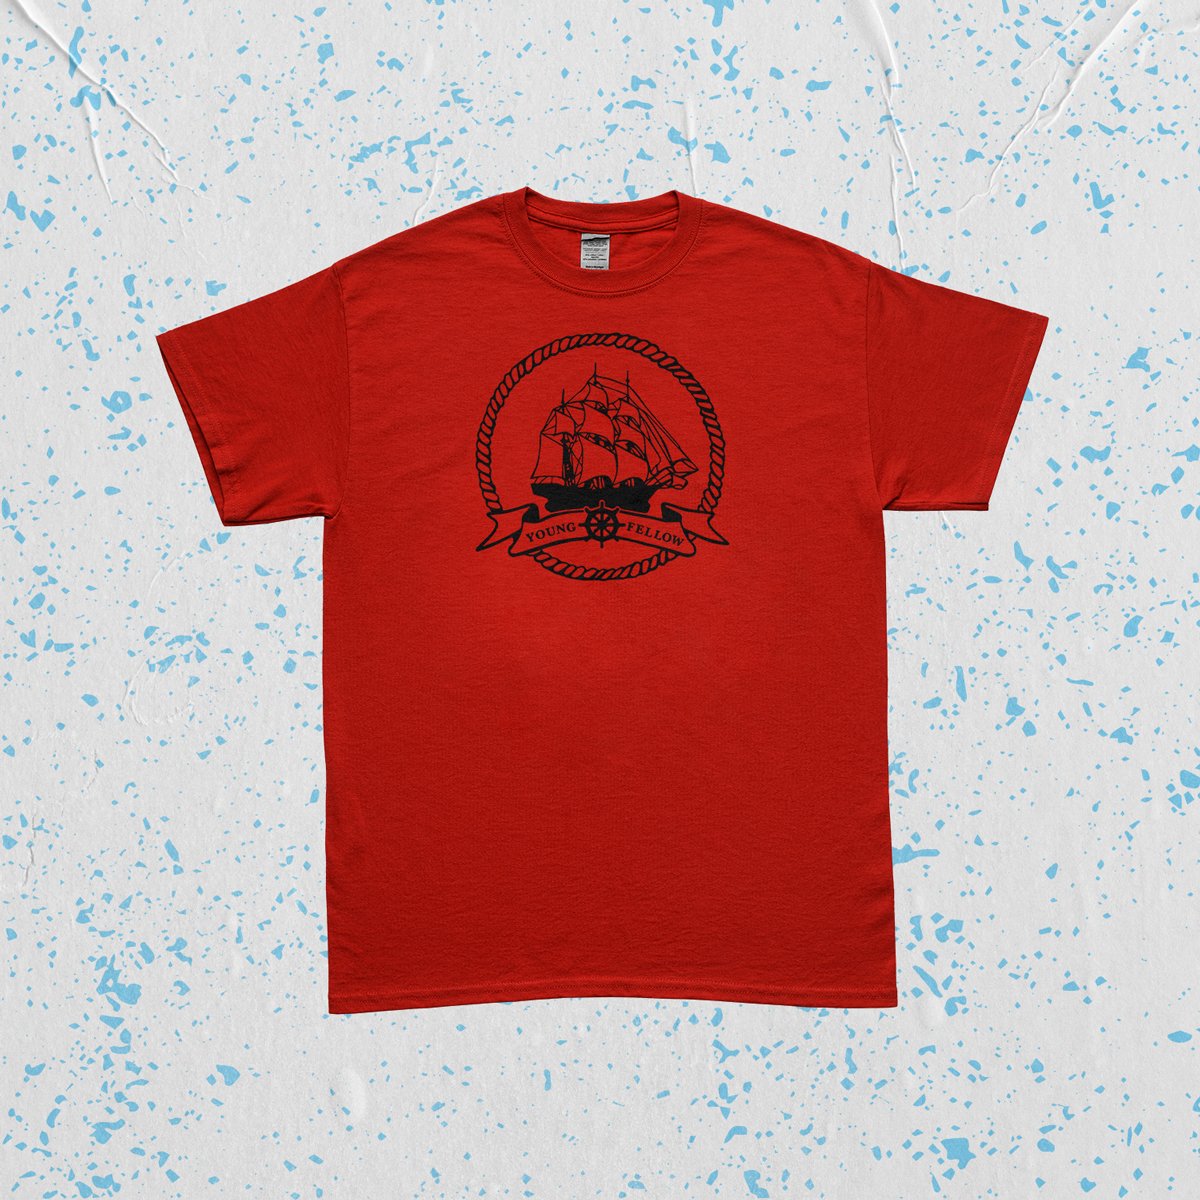 ClipperShip_blkmarket_150DPI_T-shirt-2021_red.jpg